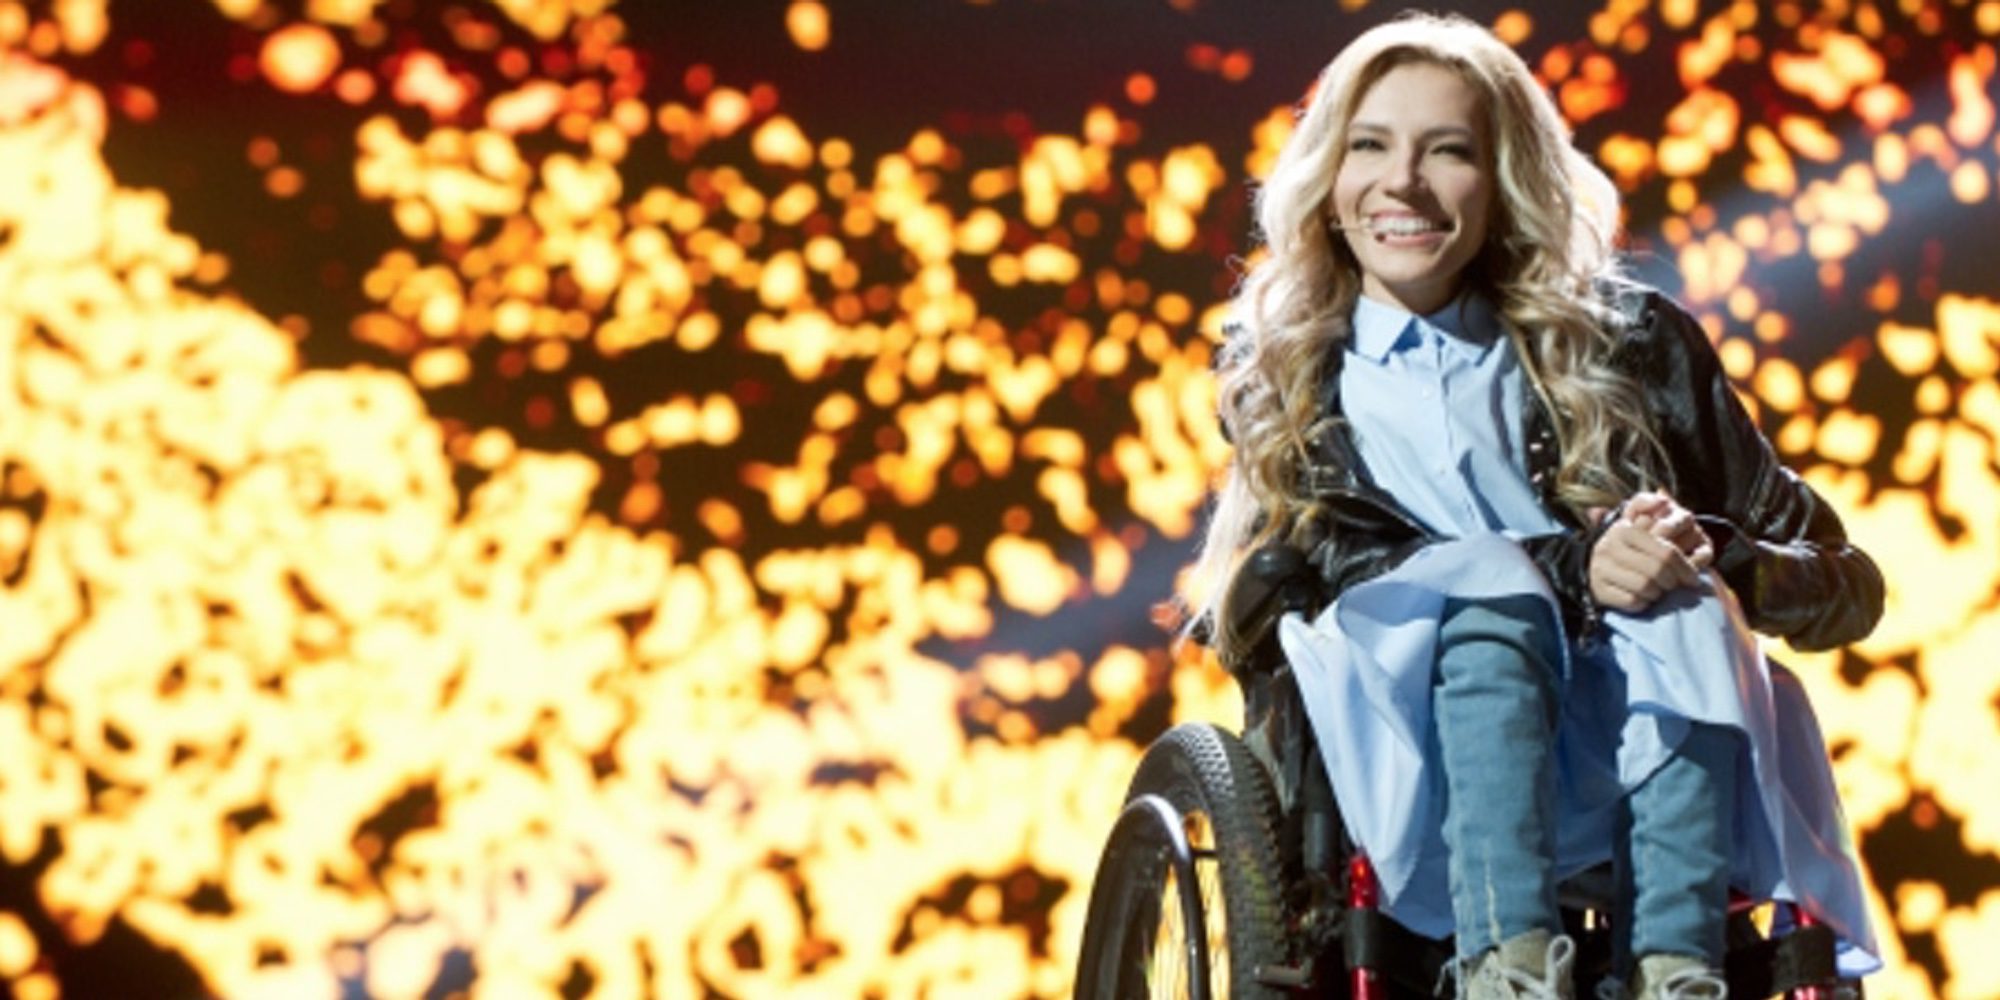 Ucrania rechaza que la representante de Rusia participe en Eurovisión 2017 vía satélite